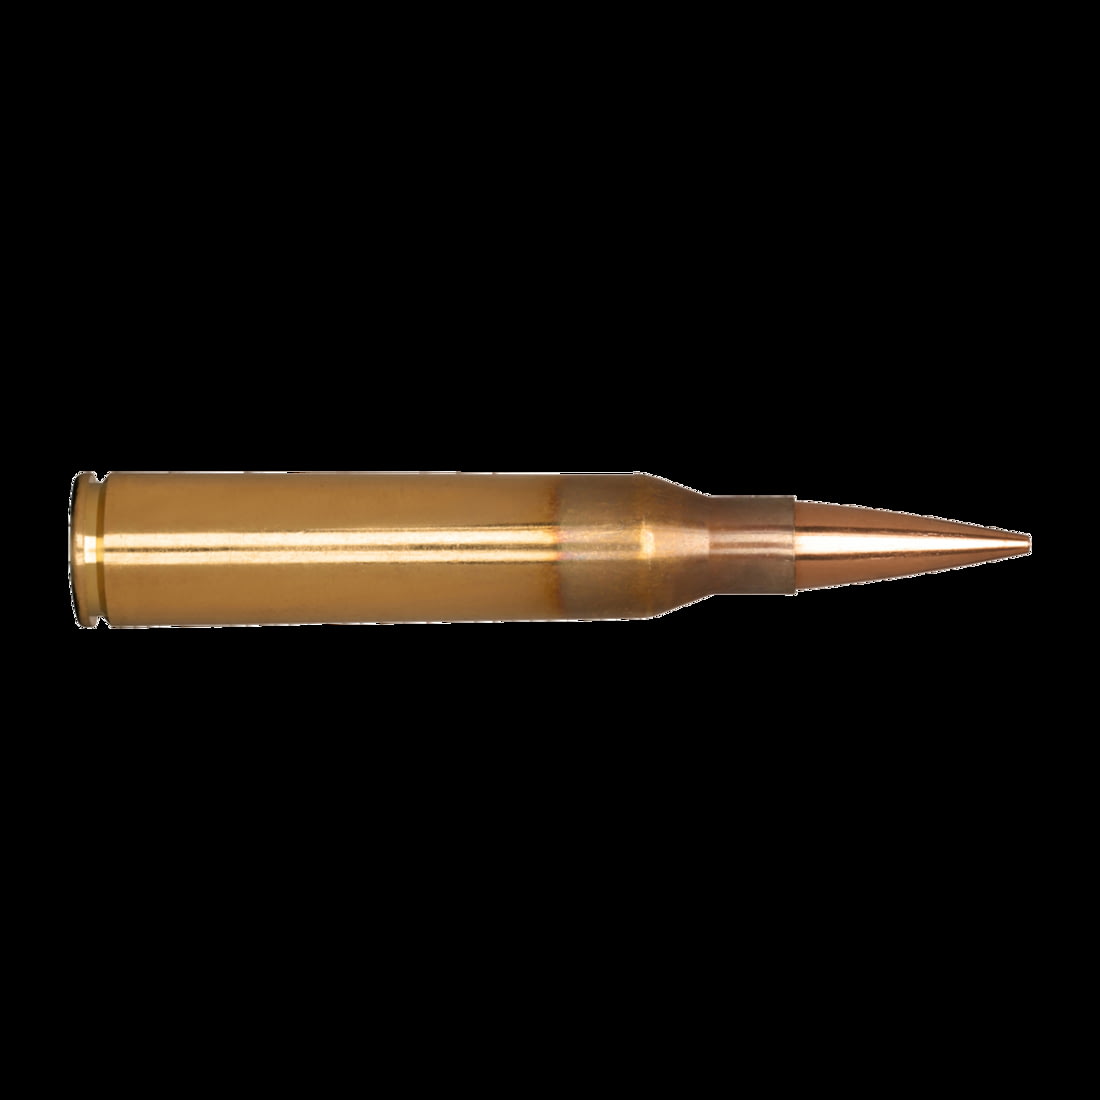 Berger Elite Hunter .338 Lapua Magnum 250 grain Elite Hunter Brass Cased Centerfire Rifle Ammunition